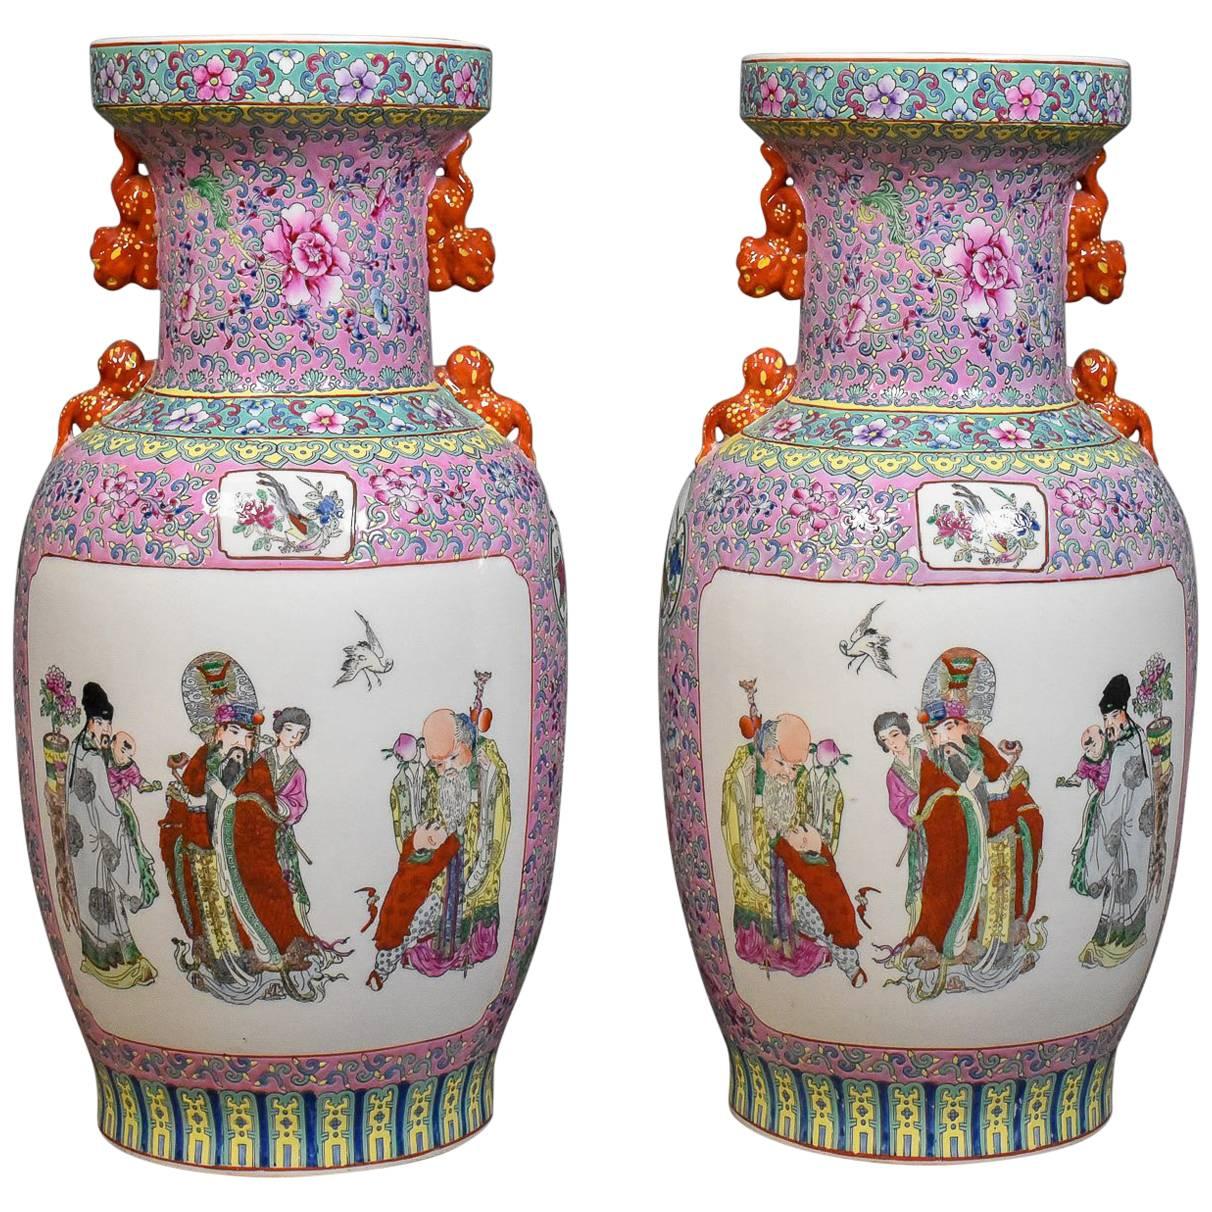 Midcentury Pair of Chinese Baluster Vases, Hand-Painted Ceramic Urns